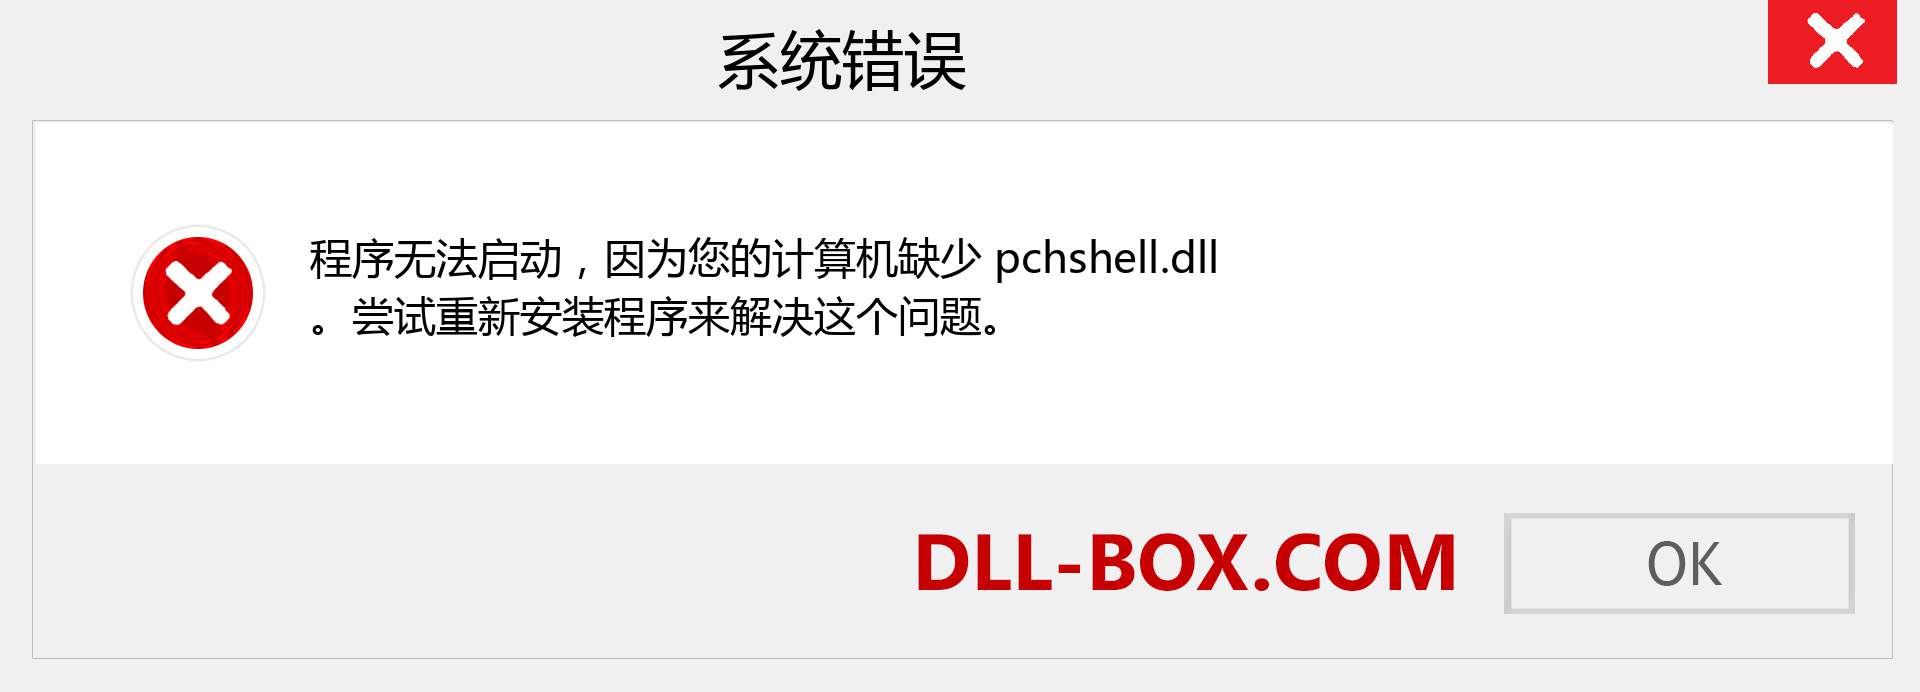 pchshell.dll 文件丢失？。 适用于 Windows 7、8、10 的下载 - 修复 Windows、照片、图像上的 pchshell dll 丢失错误